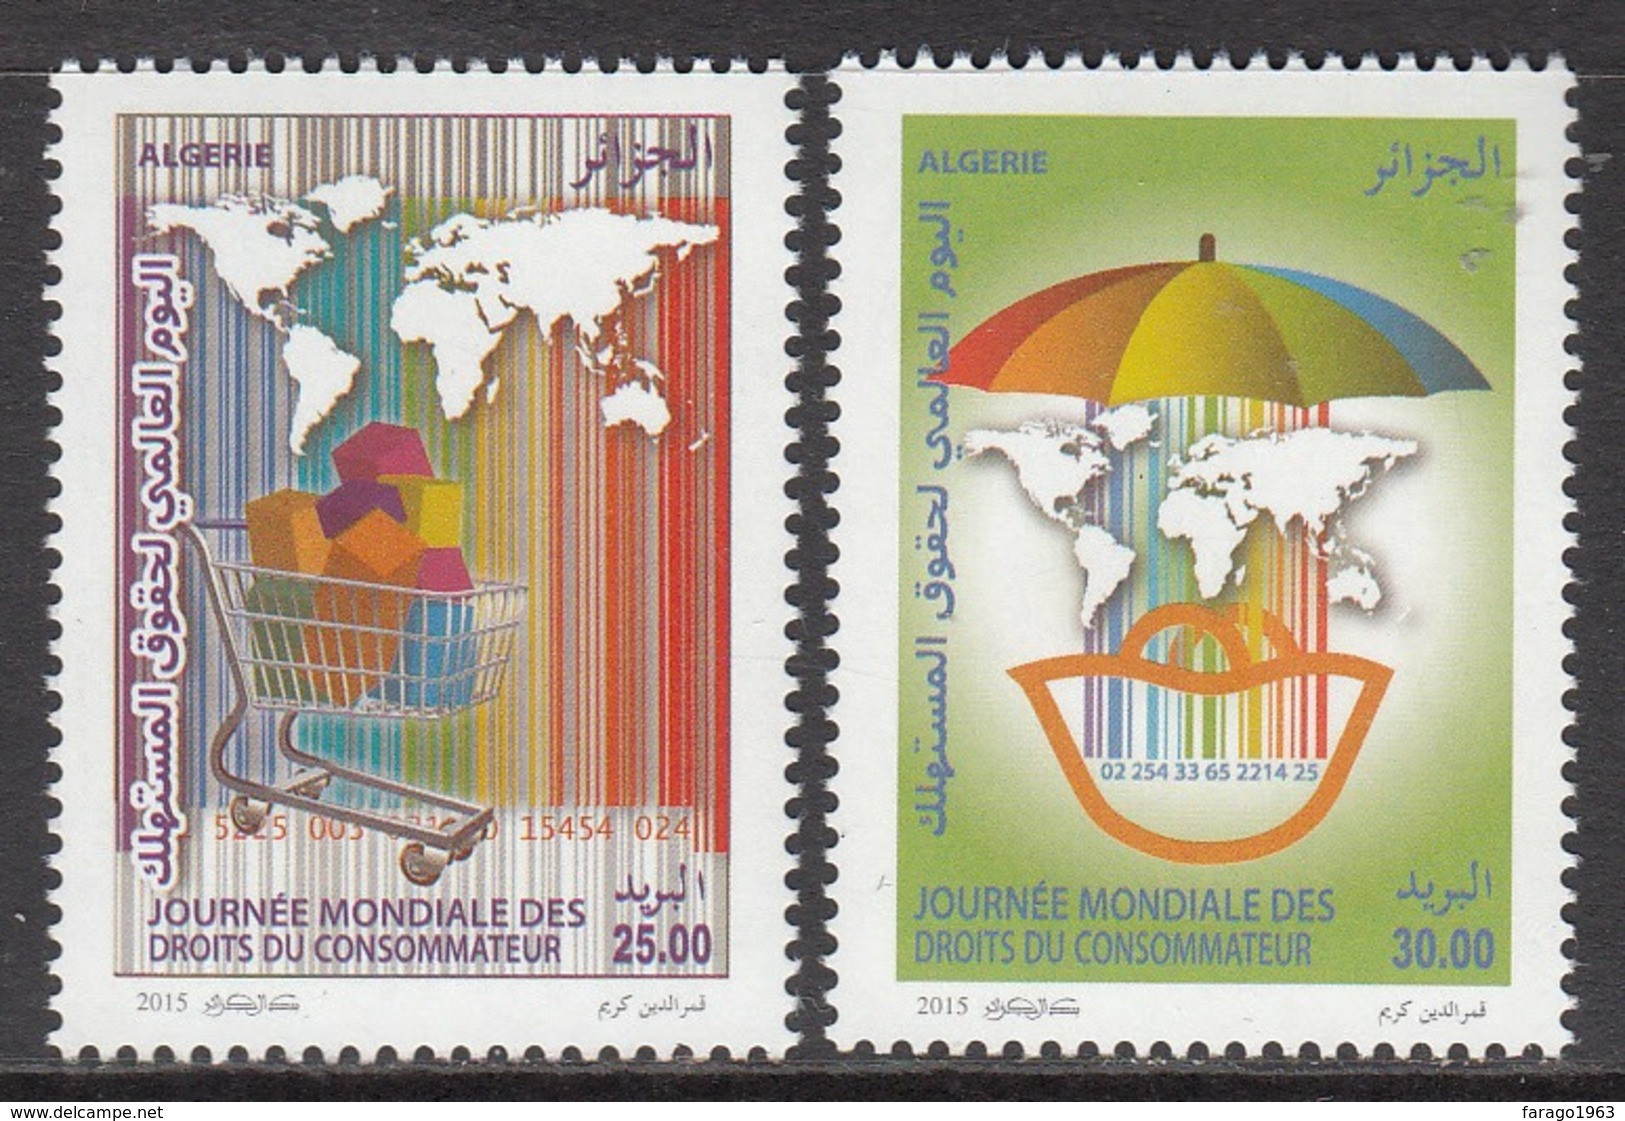 2015 Algeria Algerie Consumer Rights Complete Set Of 2 MNH - Argelia (1962-...)